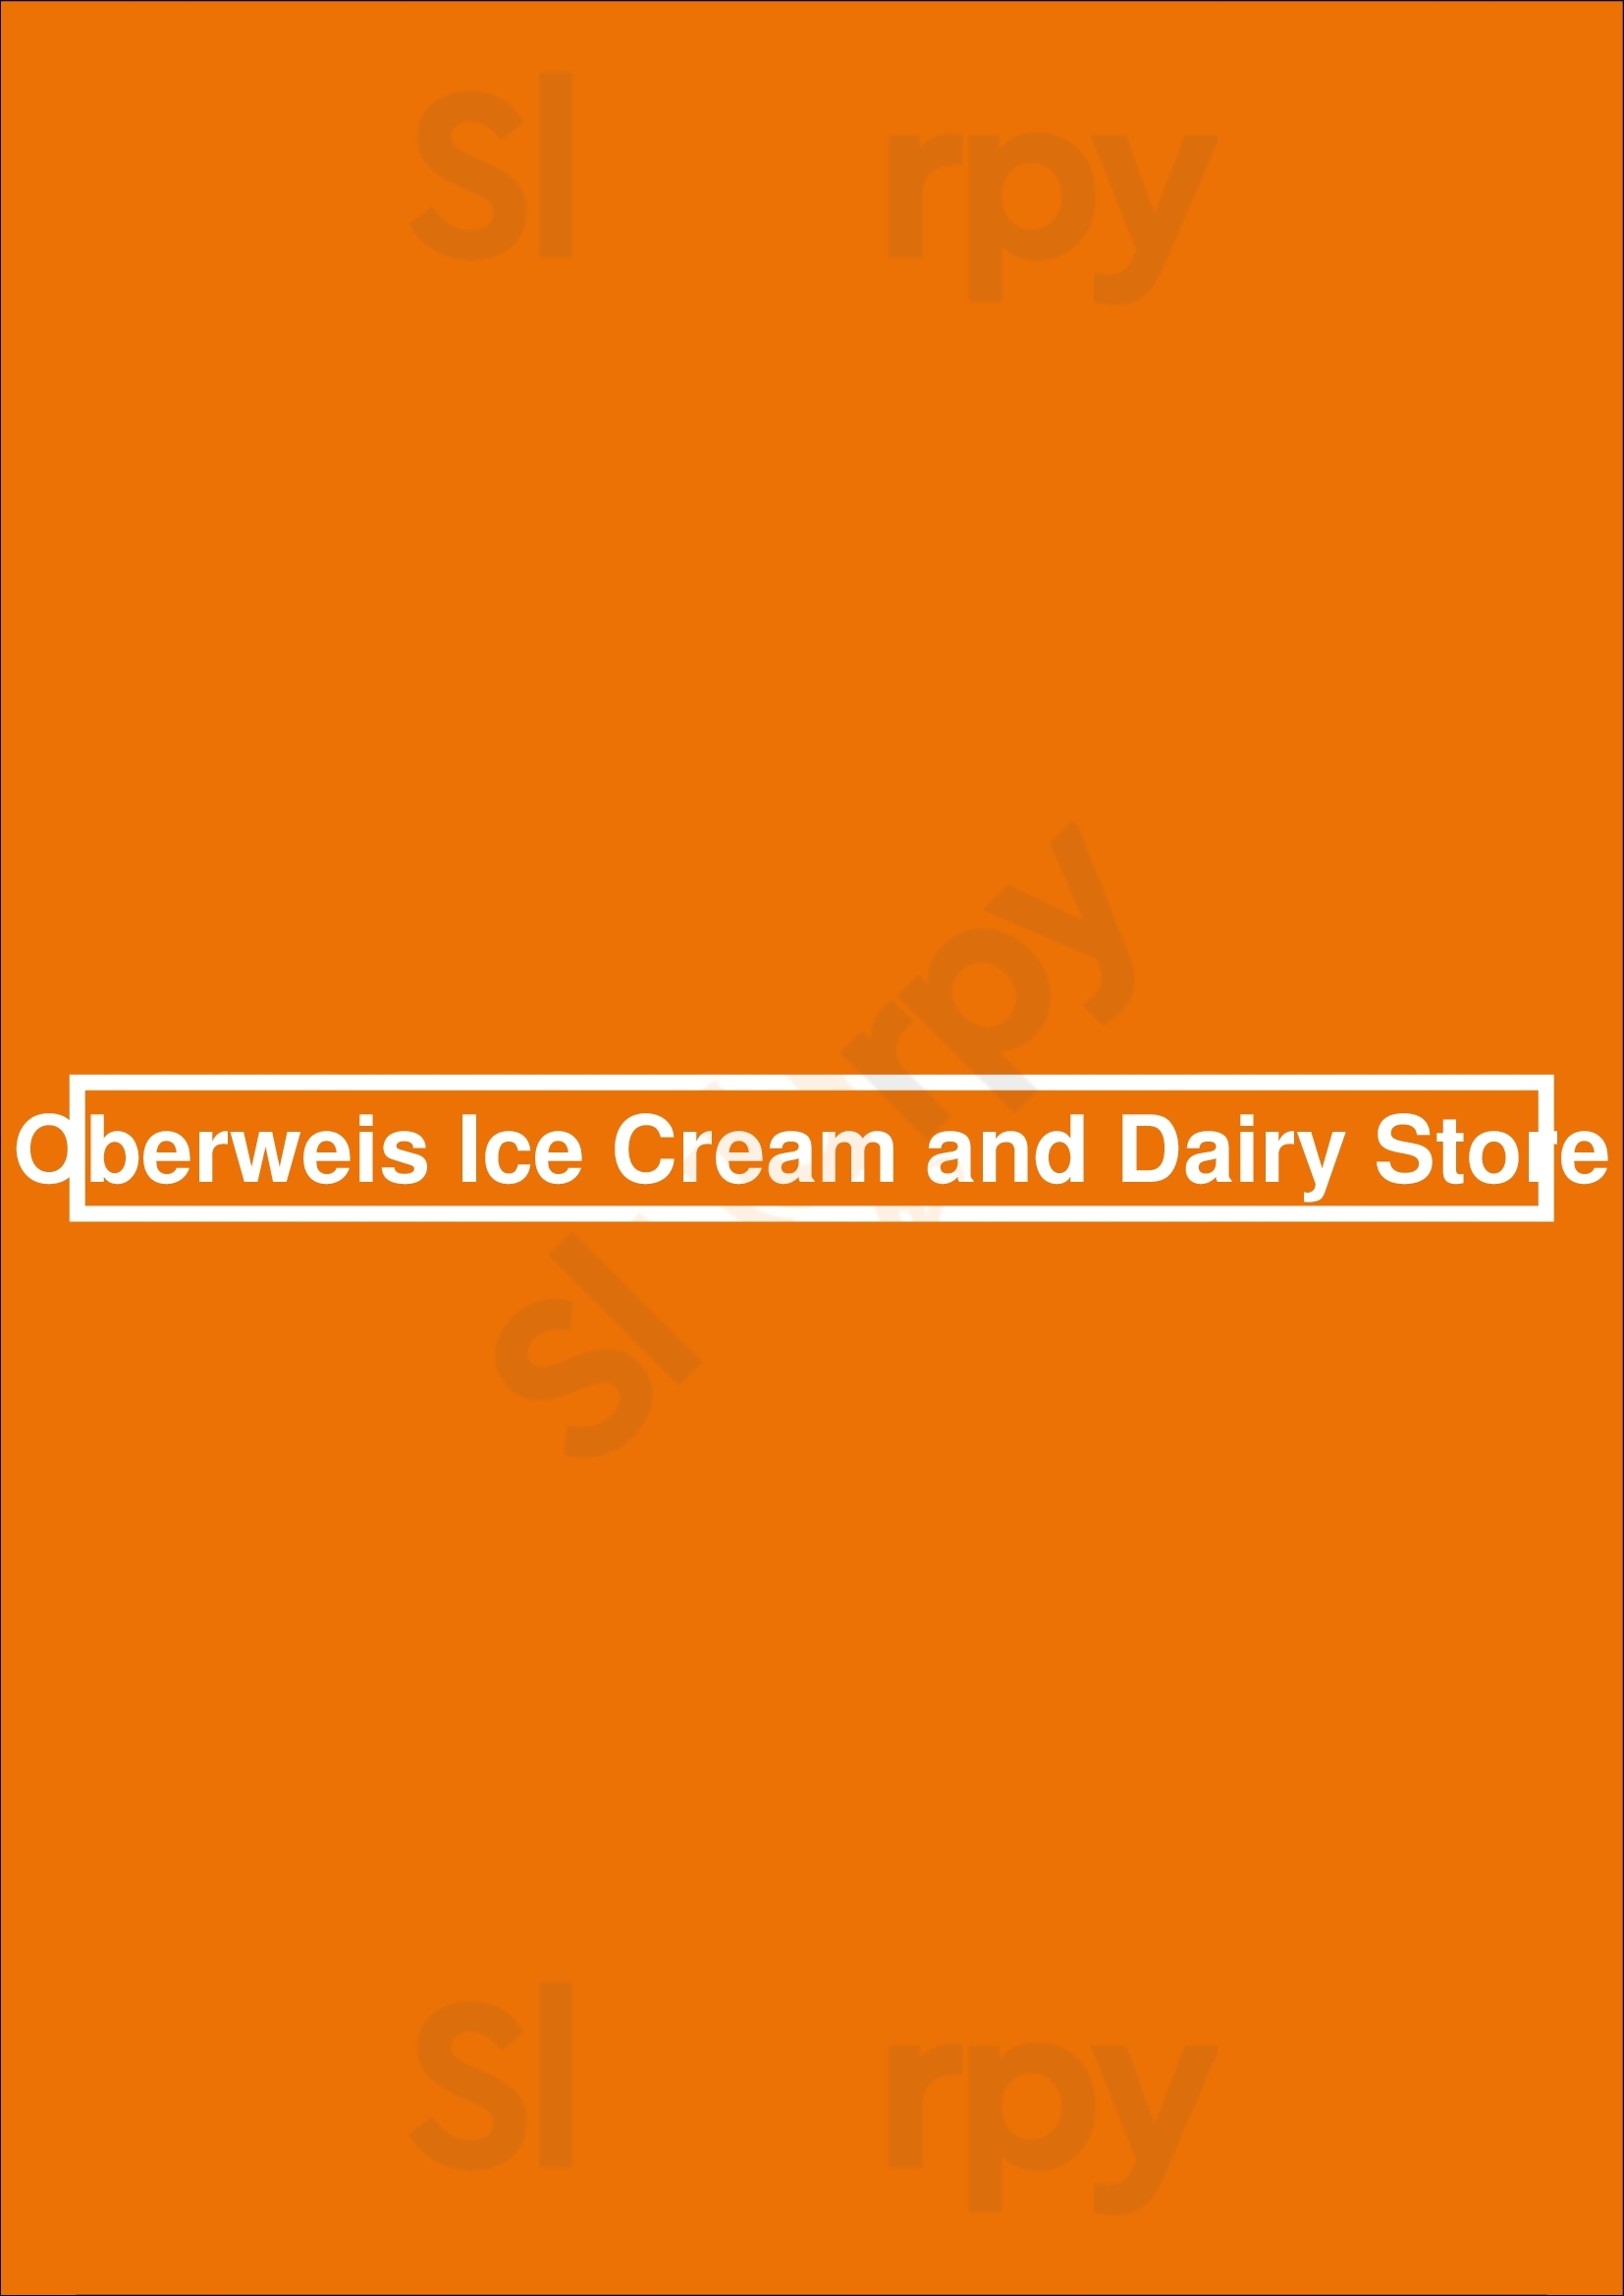 Oberweis Ice Cream And Dairy Store Saint Louis Menu - 1